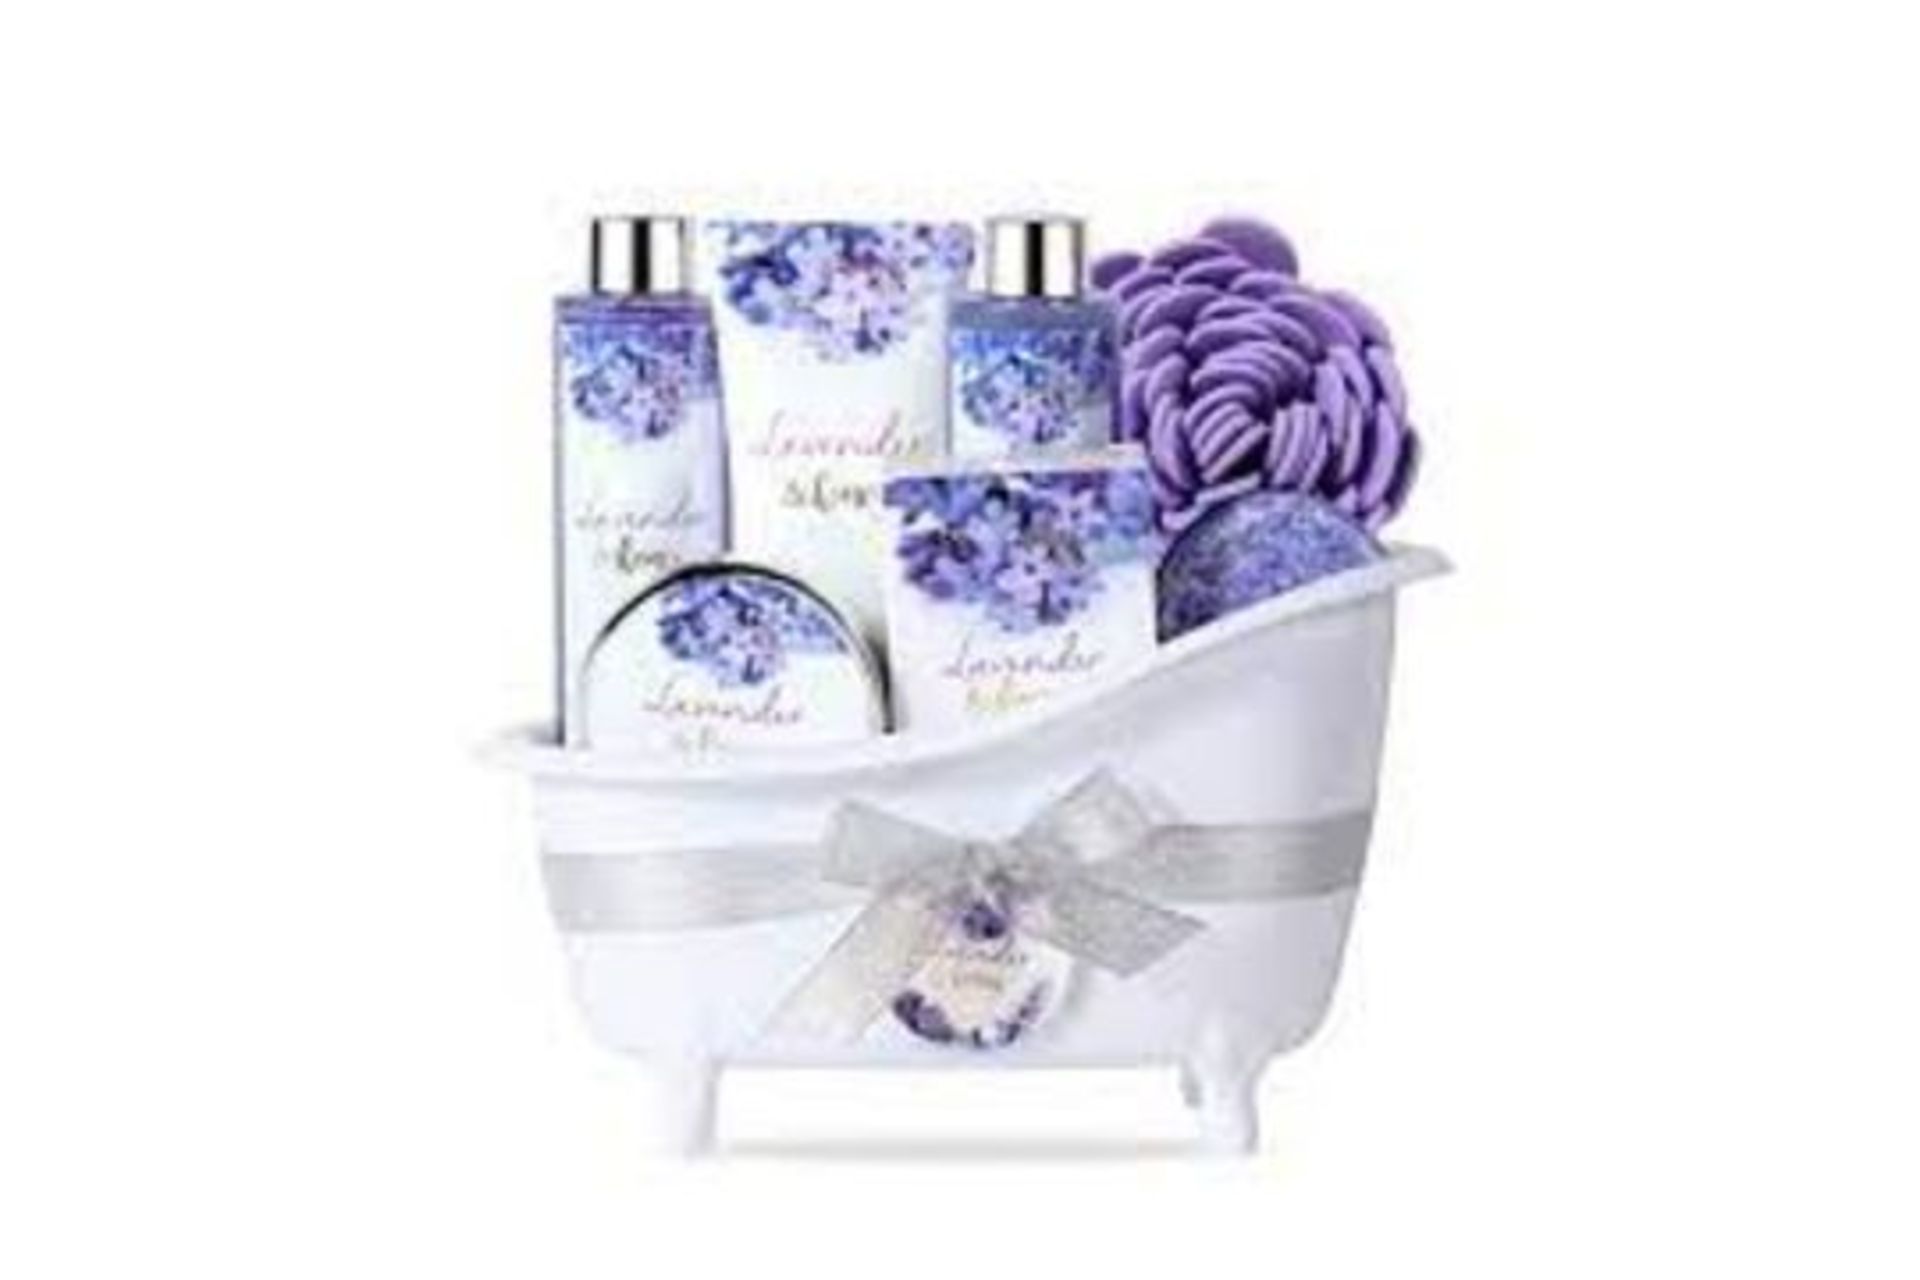 6 x NEW PACKAGED BODY & EARTH Lavender & Honey Spa Bathtub Set. (ROW12) Contents: This bath set